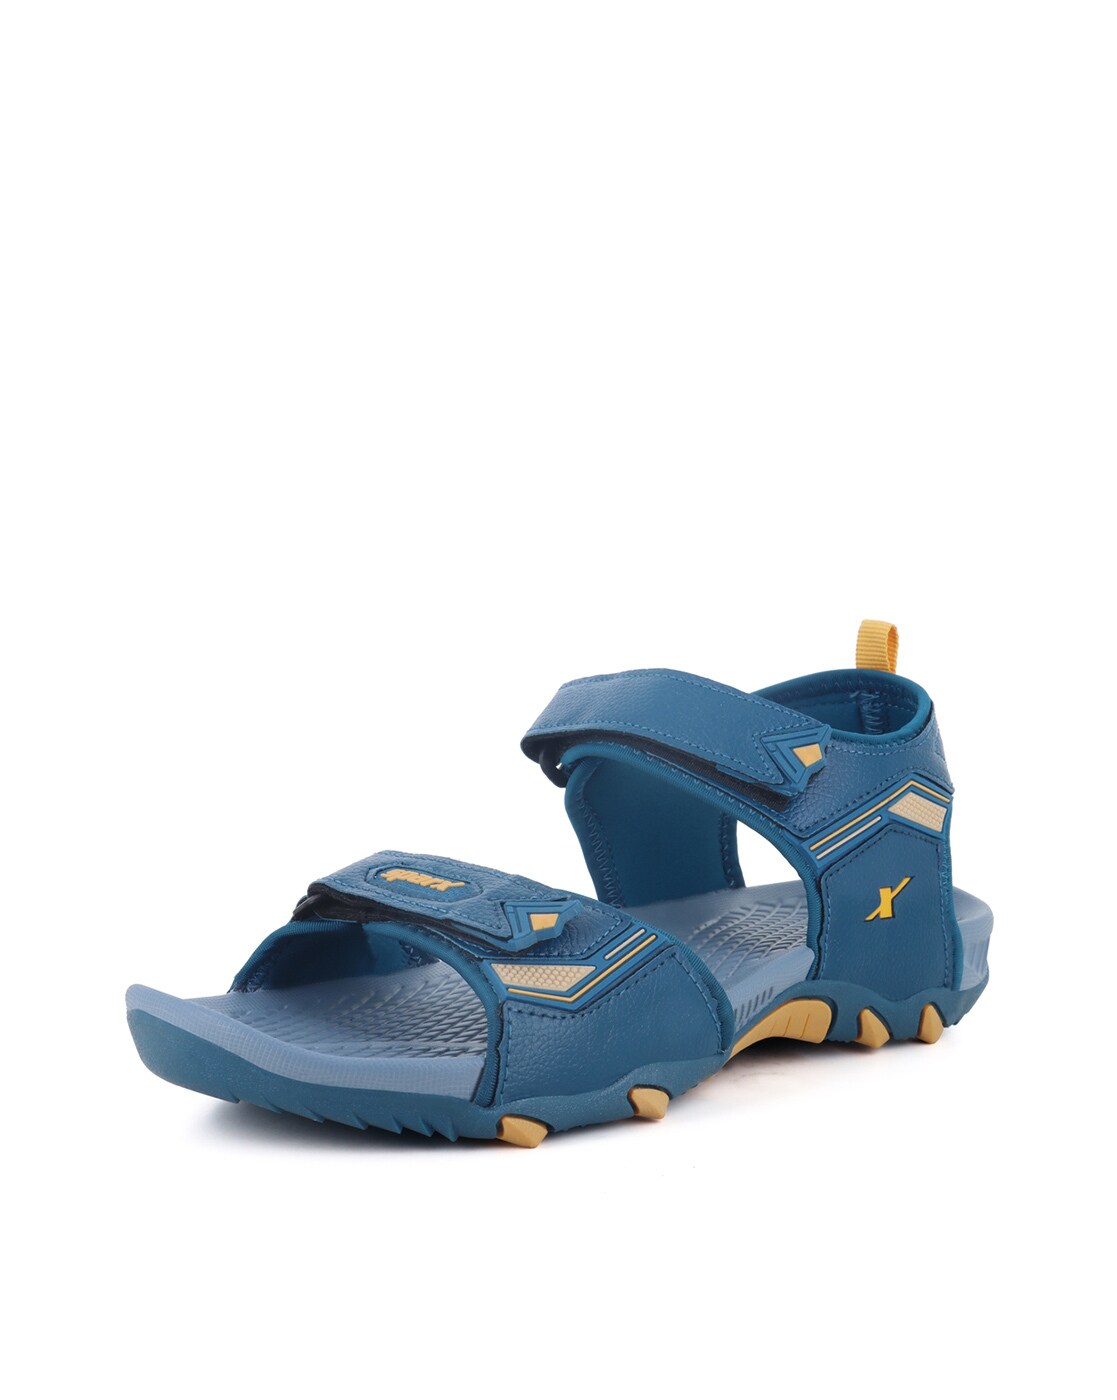 Buy Blue Sandals for Men by Campus Online | Ajio.com